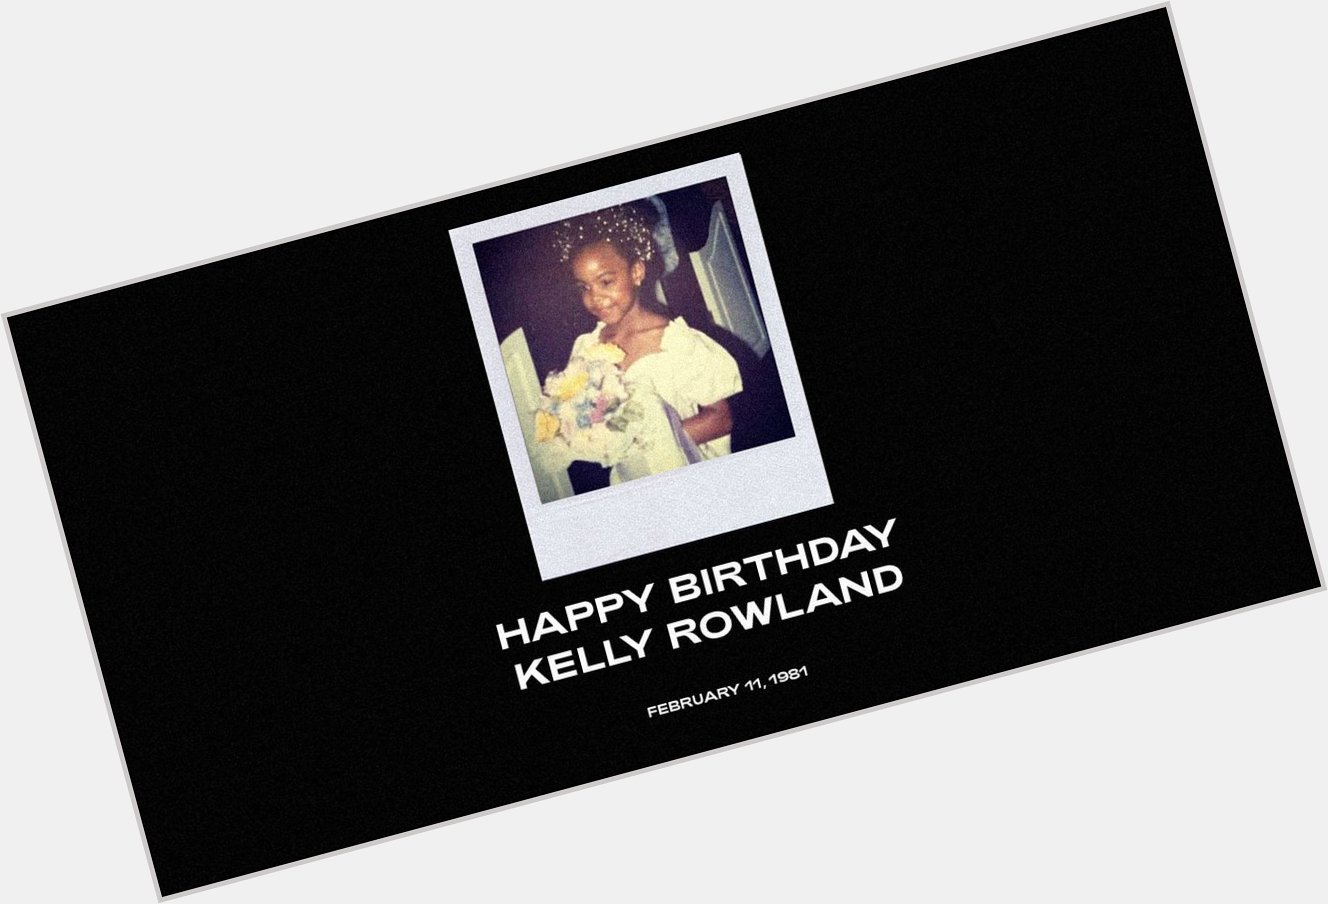  Happy Birthday Kelly Rowland  